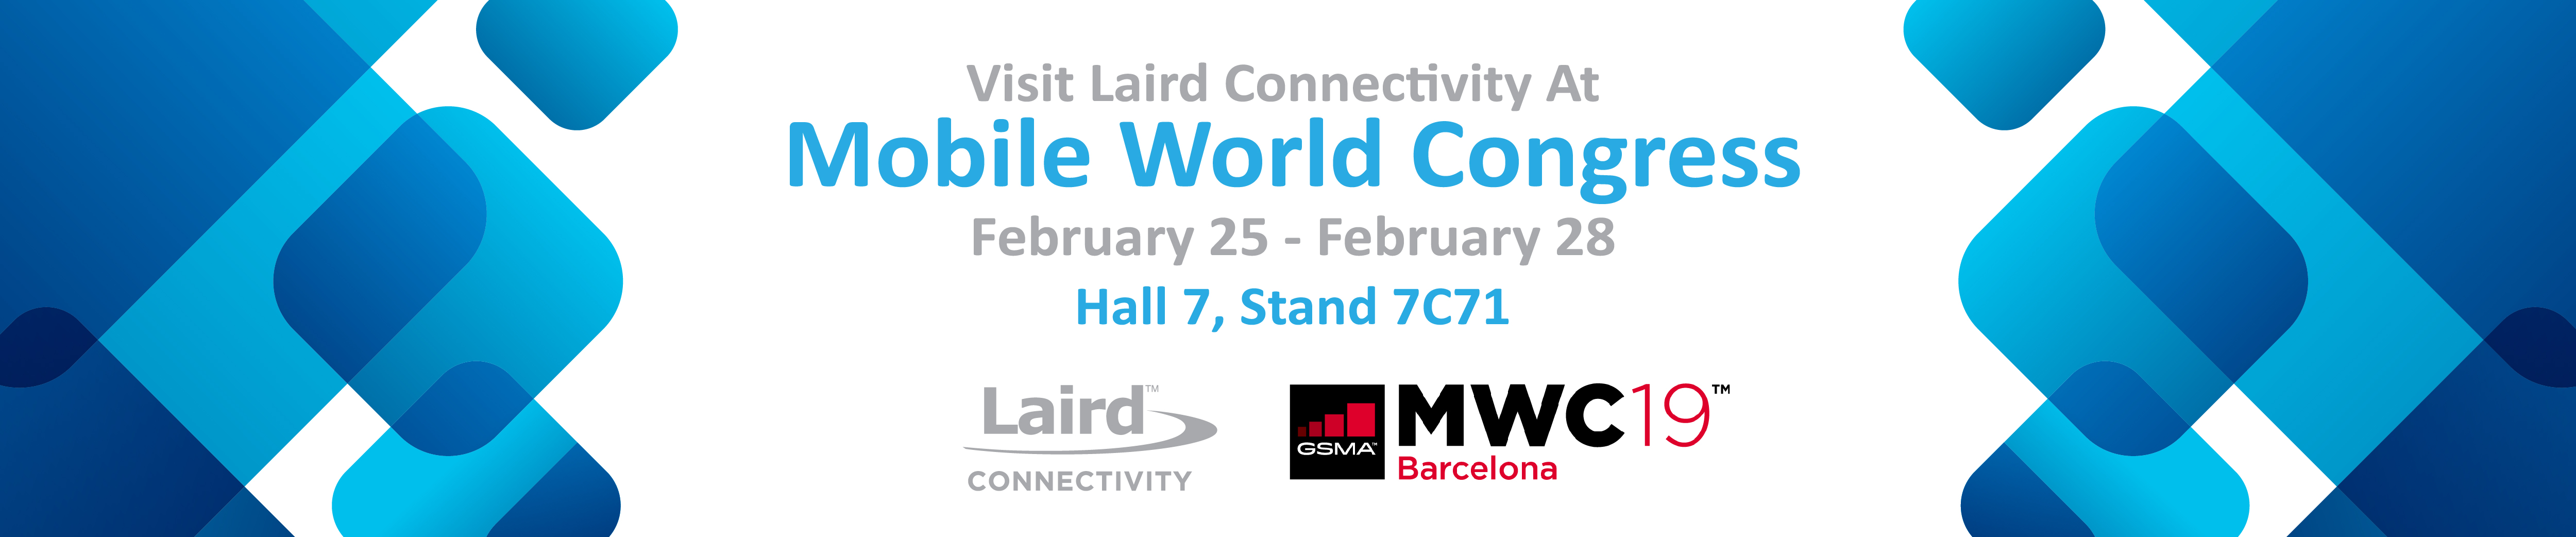 Mobile World Congress 2019 Banner Registration Page-01.jpg